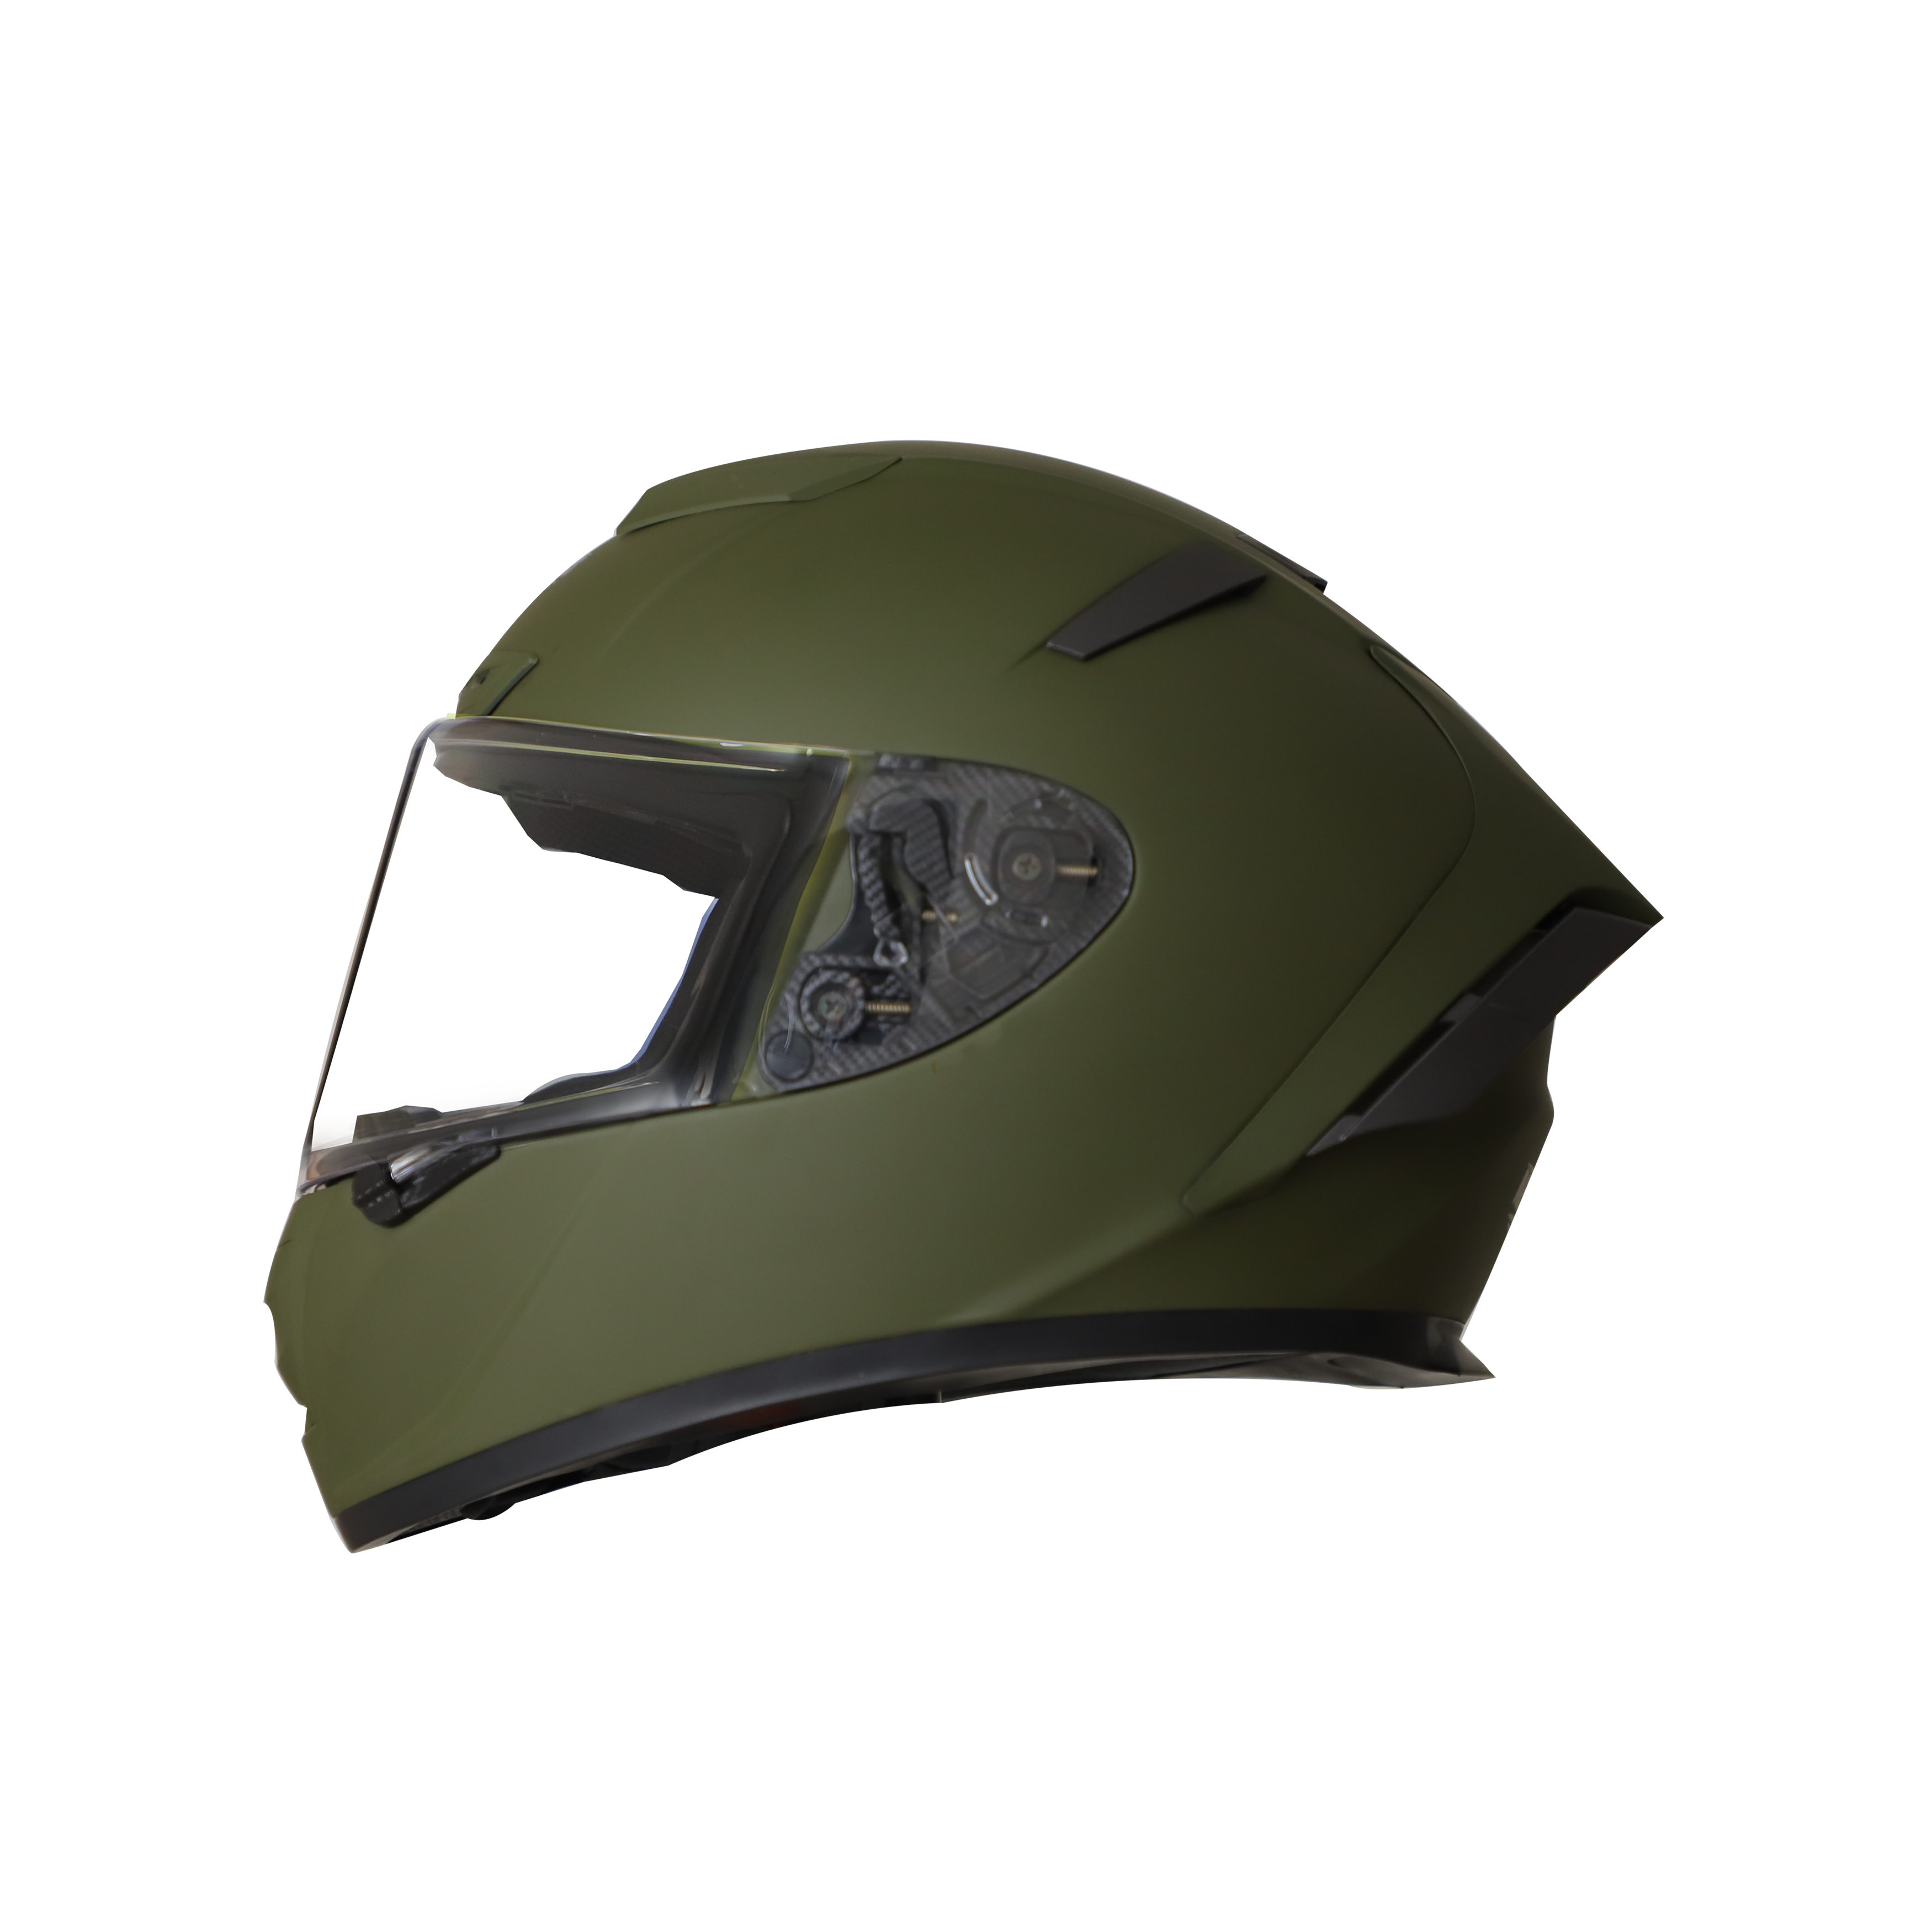 Steelbird SA-2 7Wings Super Aeronautics Full Face Helmet (Matt Battle Green With Clear Visor)